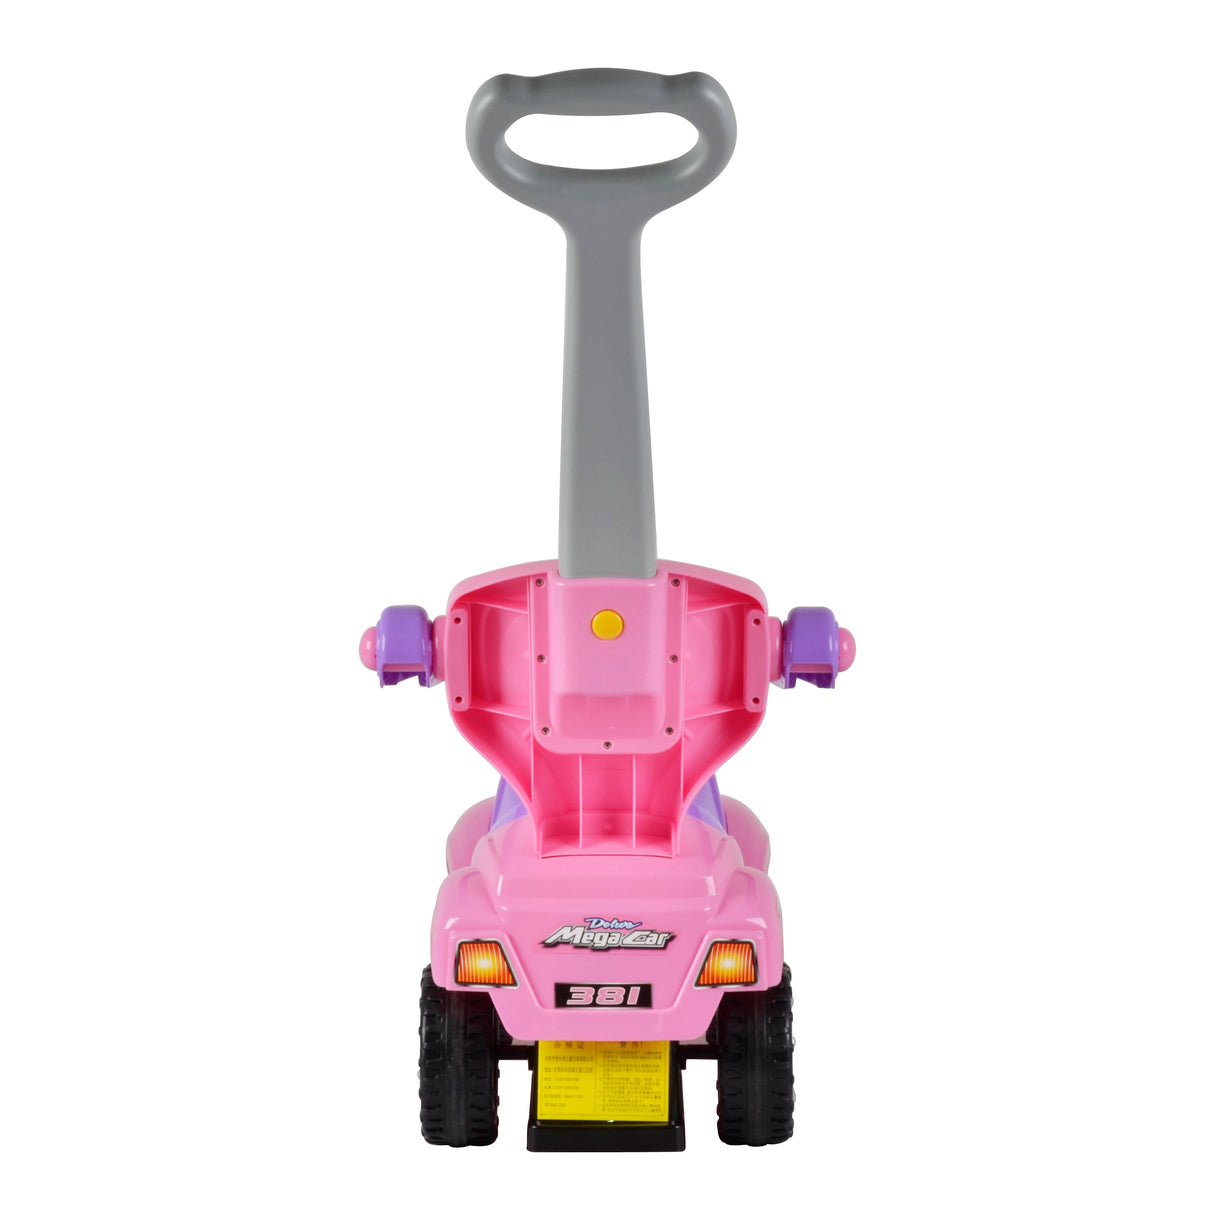 Freddo Toys Deluxe Mega Push 3 in 1 Stroller, Walker and Ride on - DTI Direct USA